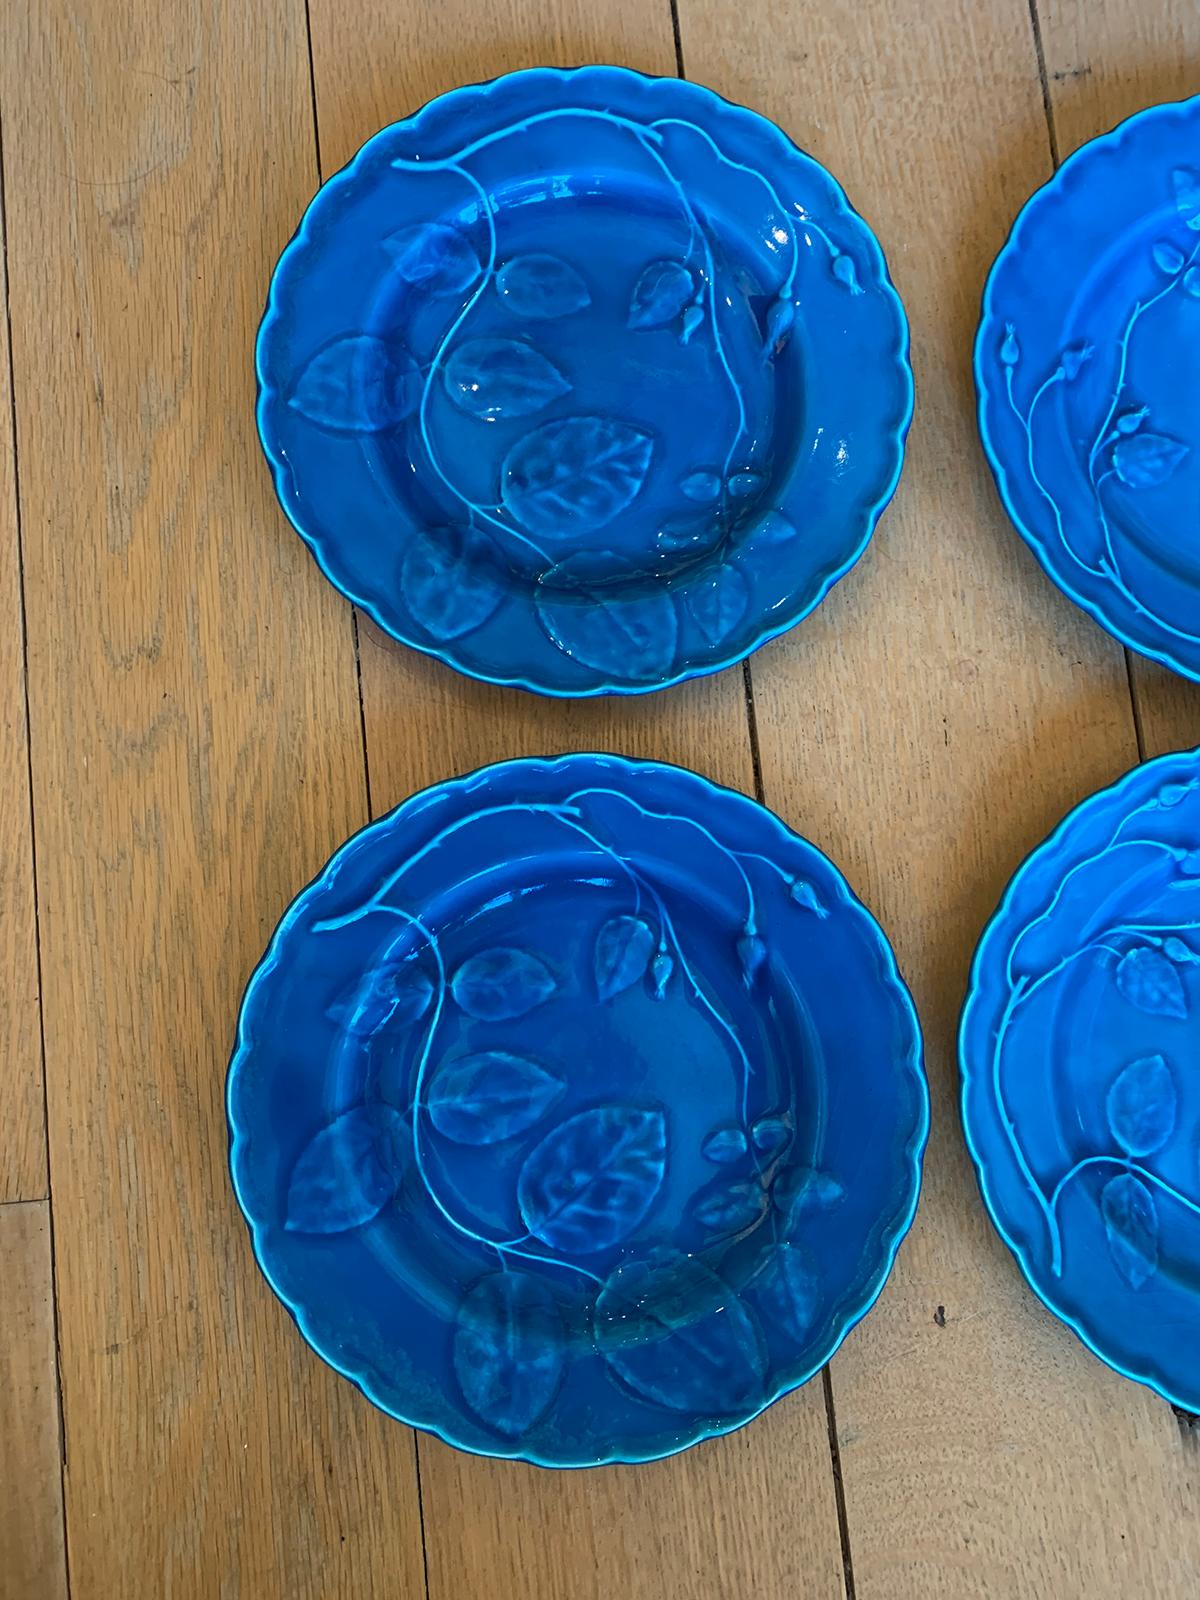 Porcelain Set of Four circa 1875 Blue Minton Plates after Royal Worcester's 